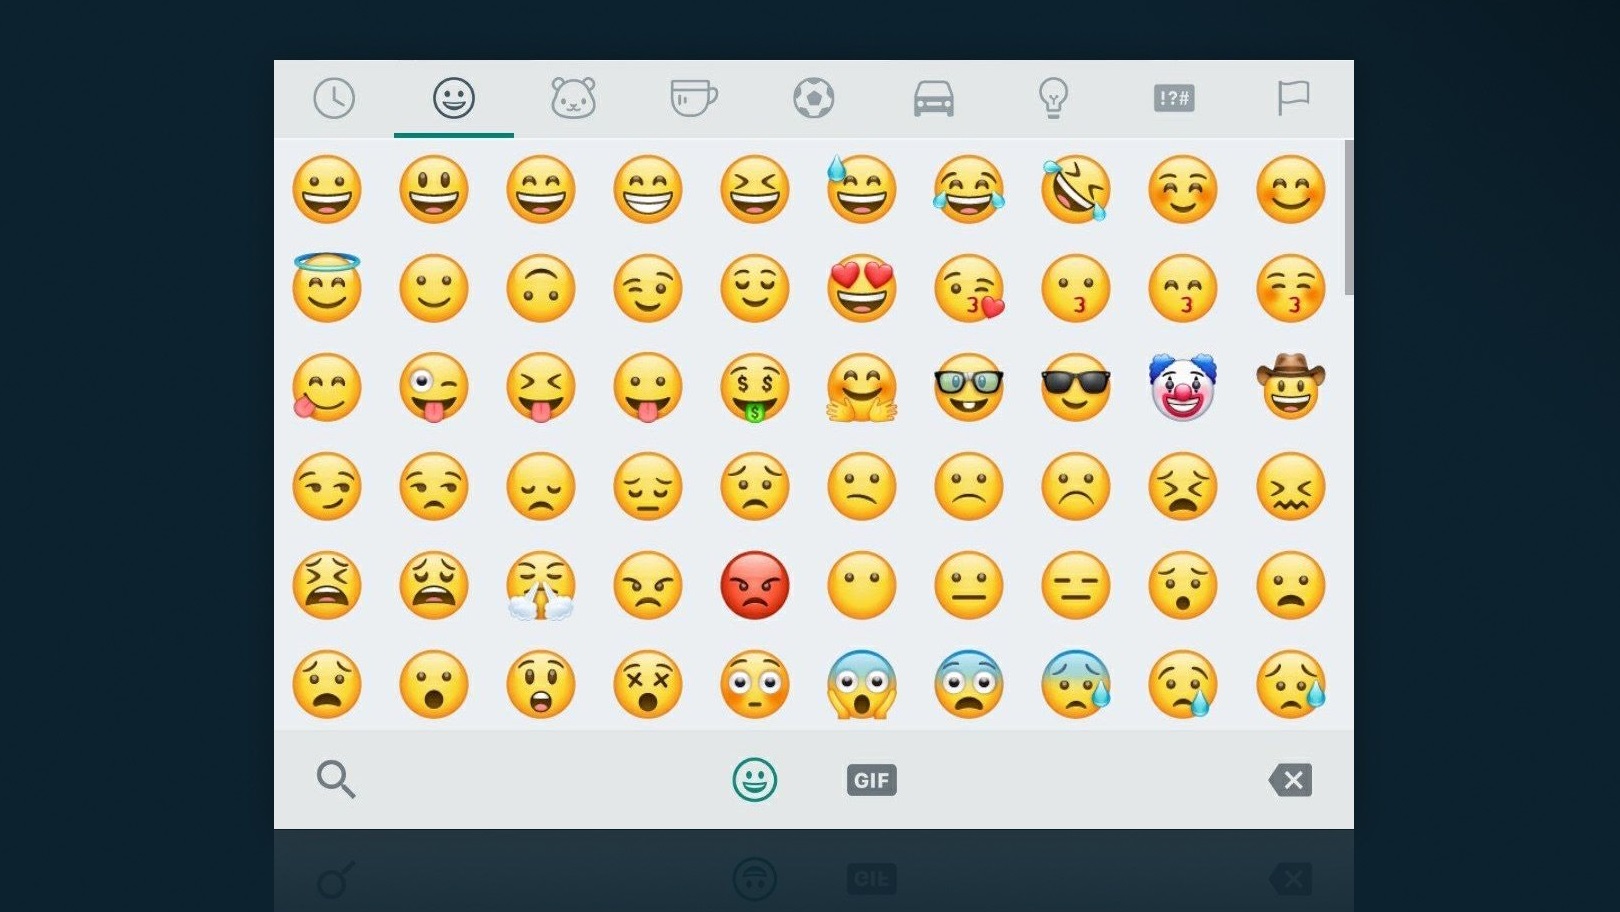 Saiba o significado destes 10 emojis utilizados no WhatsApp